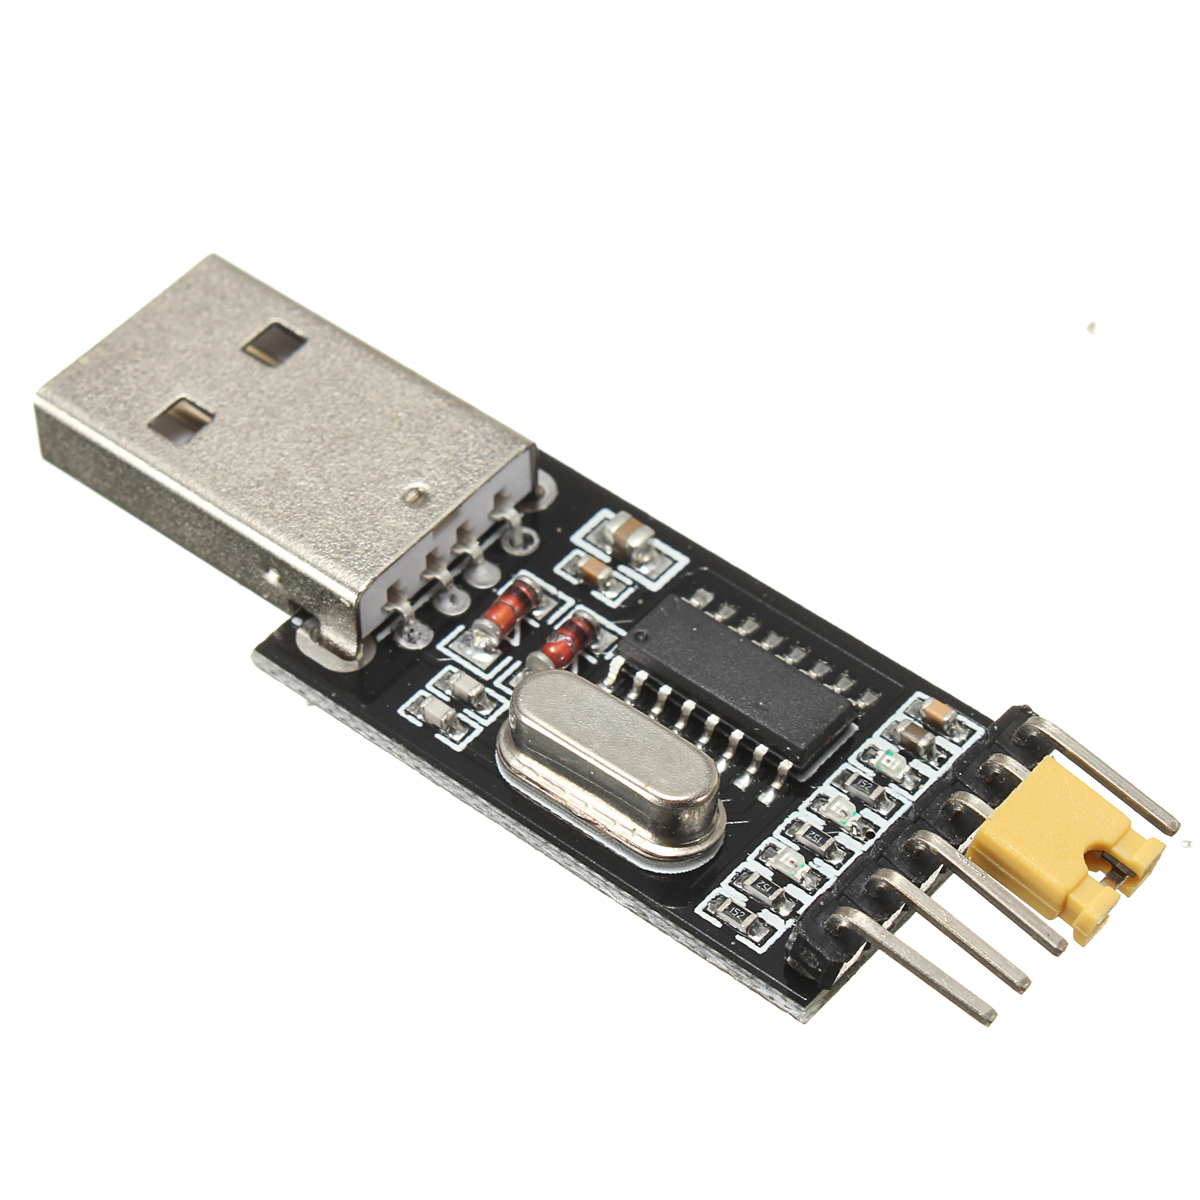 5pcs-33V-5V-USB-to-TTL-Convertor-CH340G-UART-Serial-Adapter-Module-STC-1314966-3